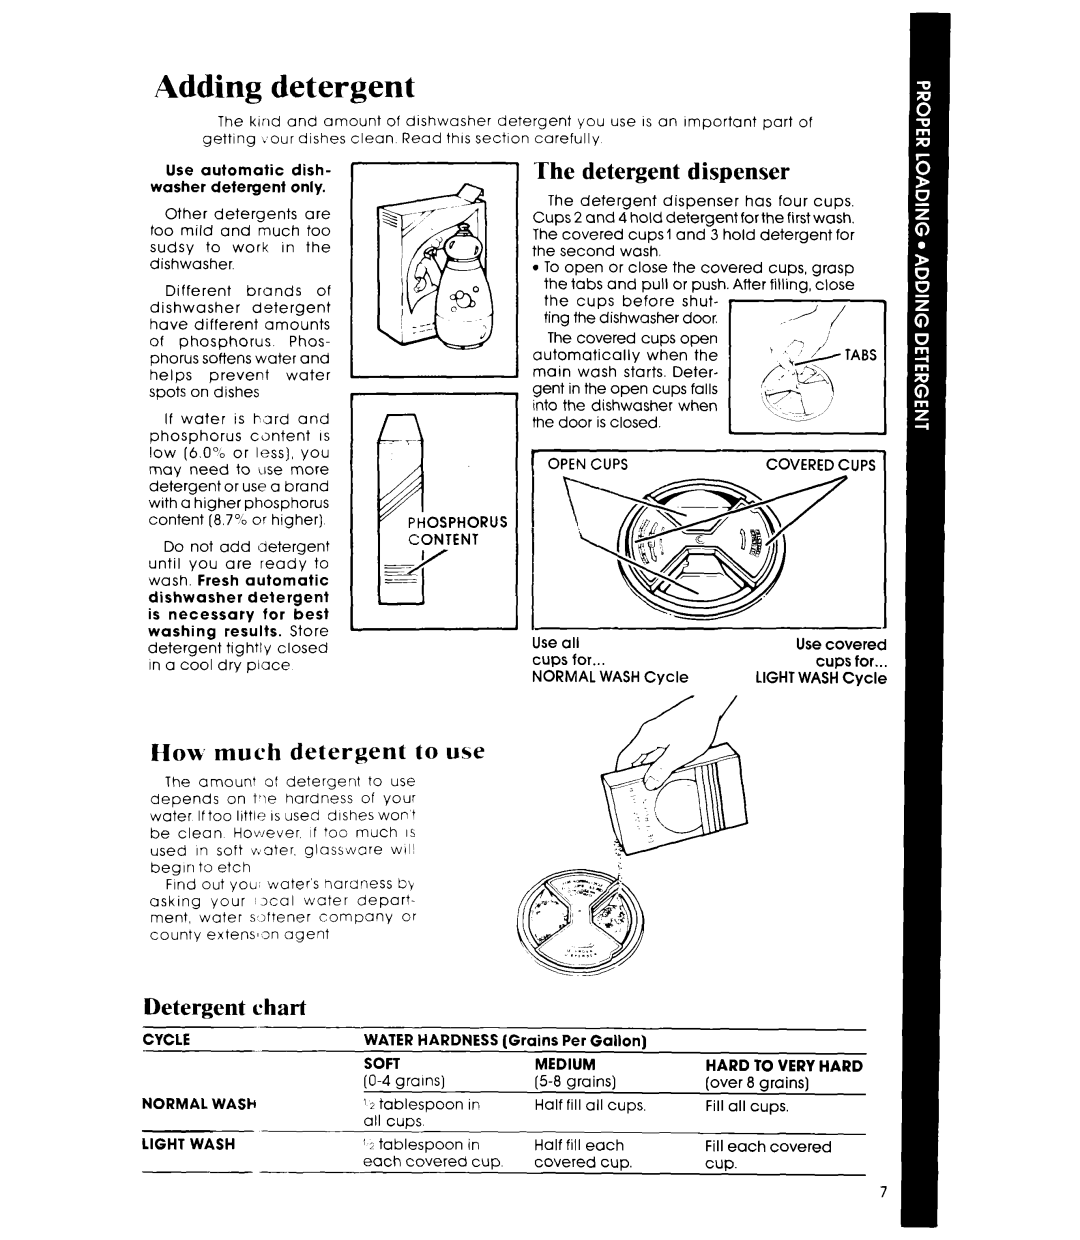 Whirlpool DU1800XT manual Adding detergent, The detergent dispenser, How much detergent to use, Detergent chart 